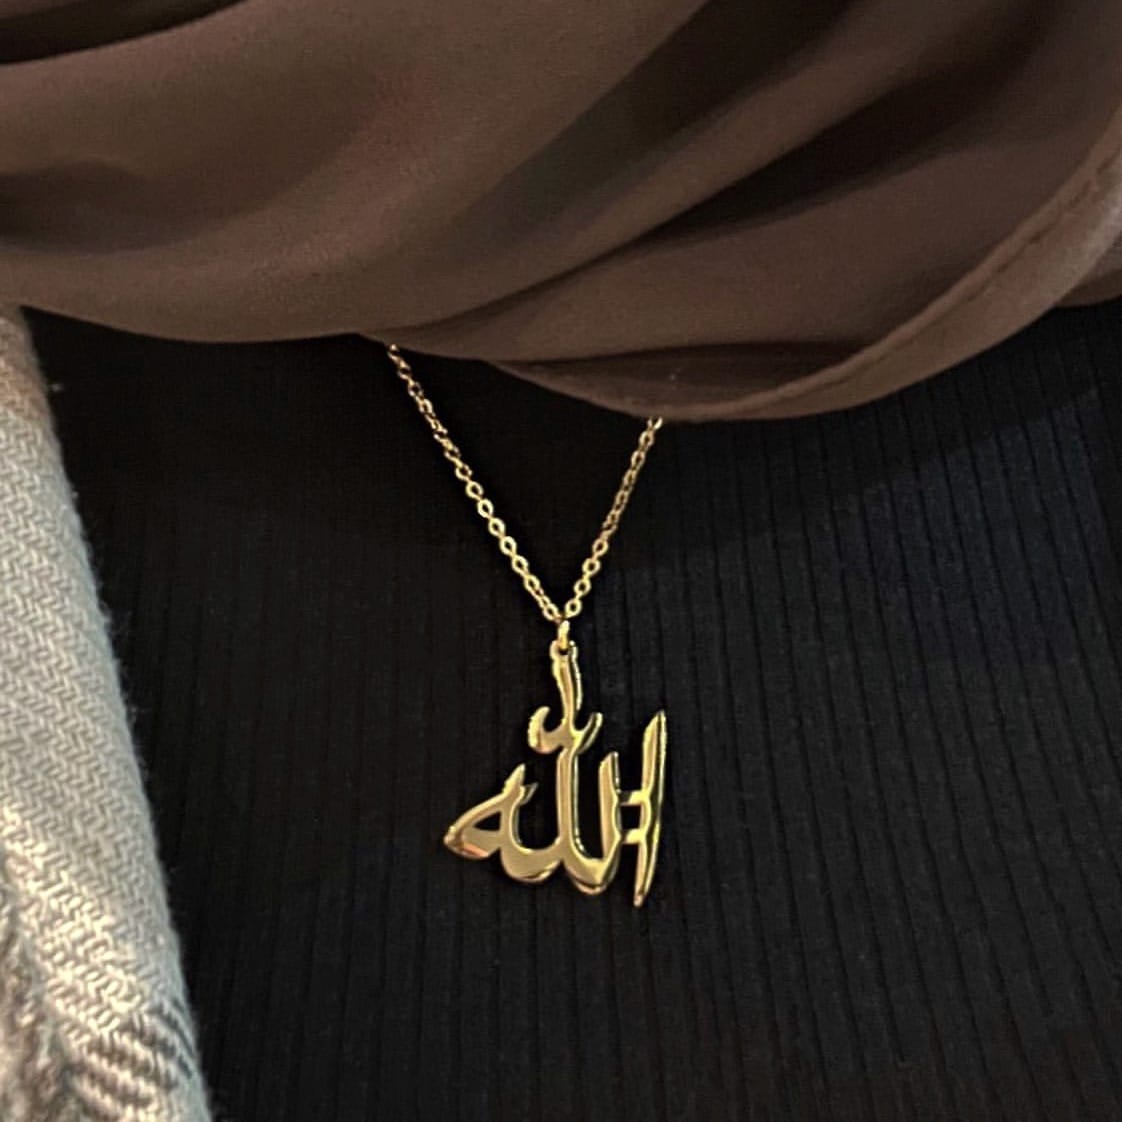 Allah Pendant Necklace - Necklace - Fajr Noor